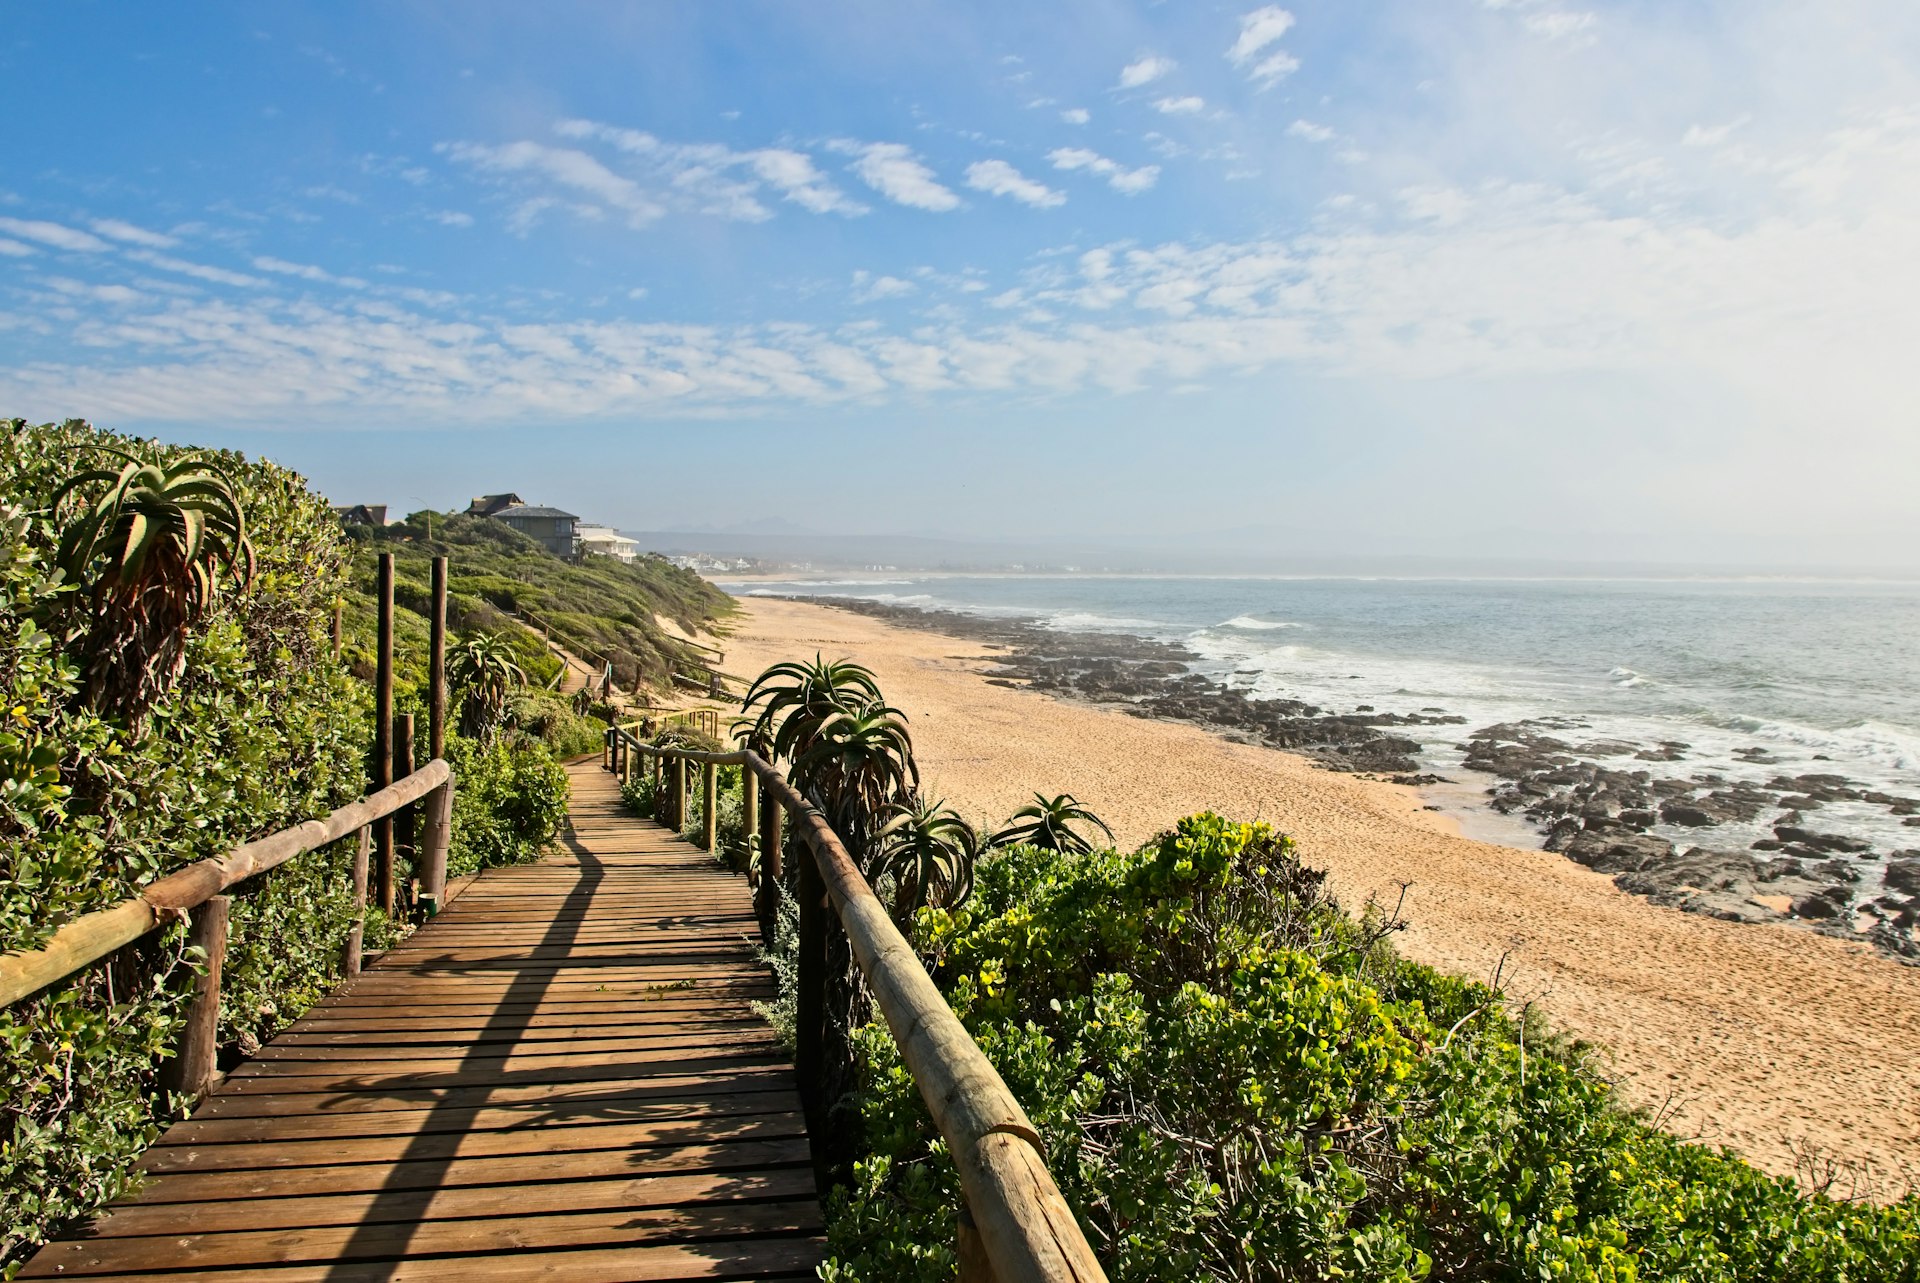 Supertubes beach in Jeffrey's Bay, South Africa, popular surfing beach